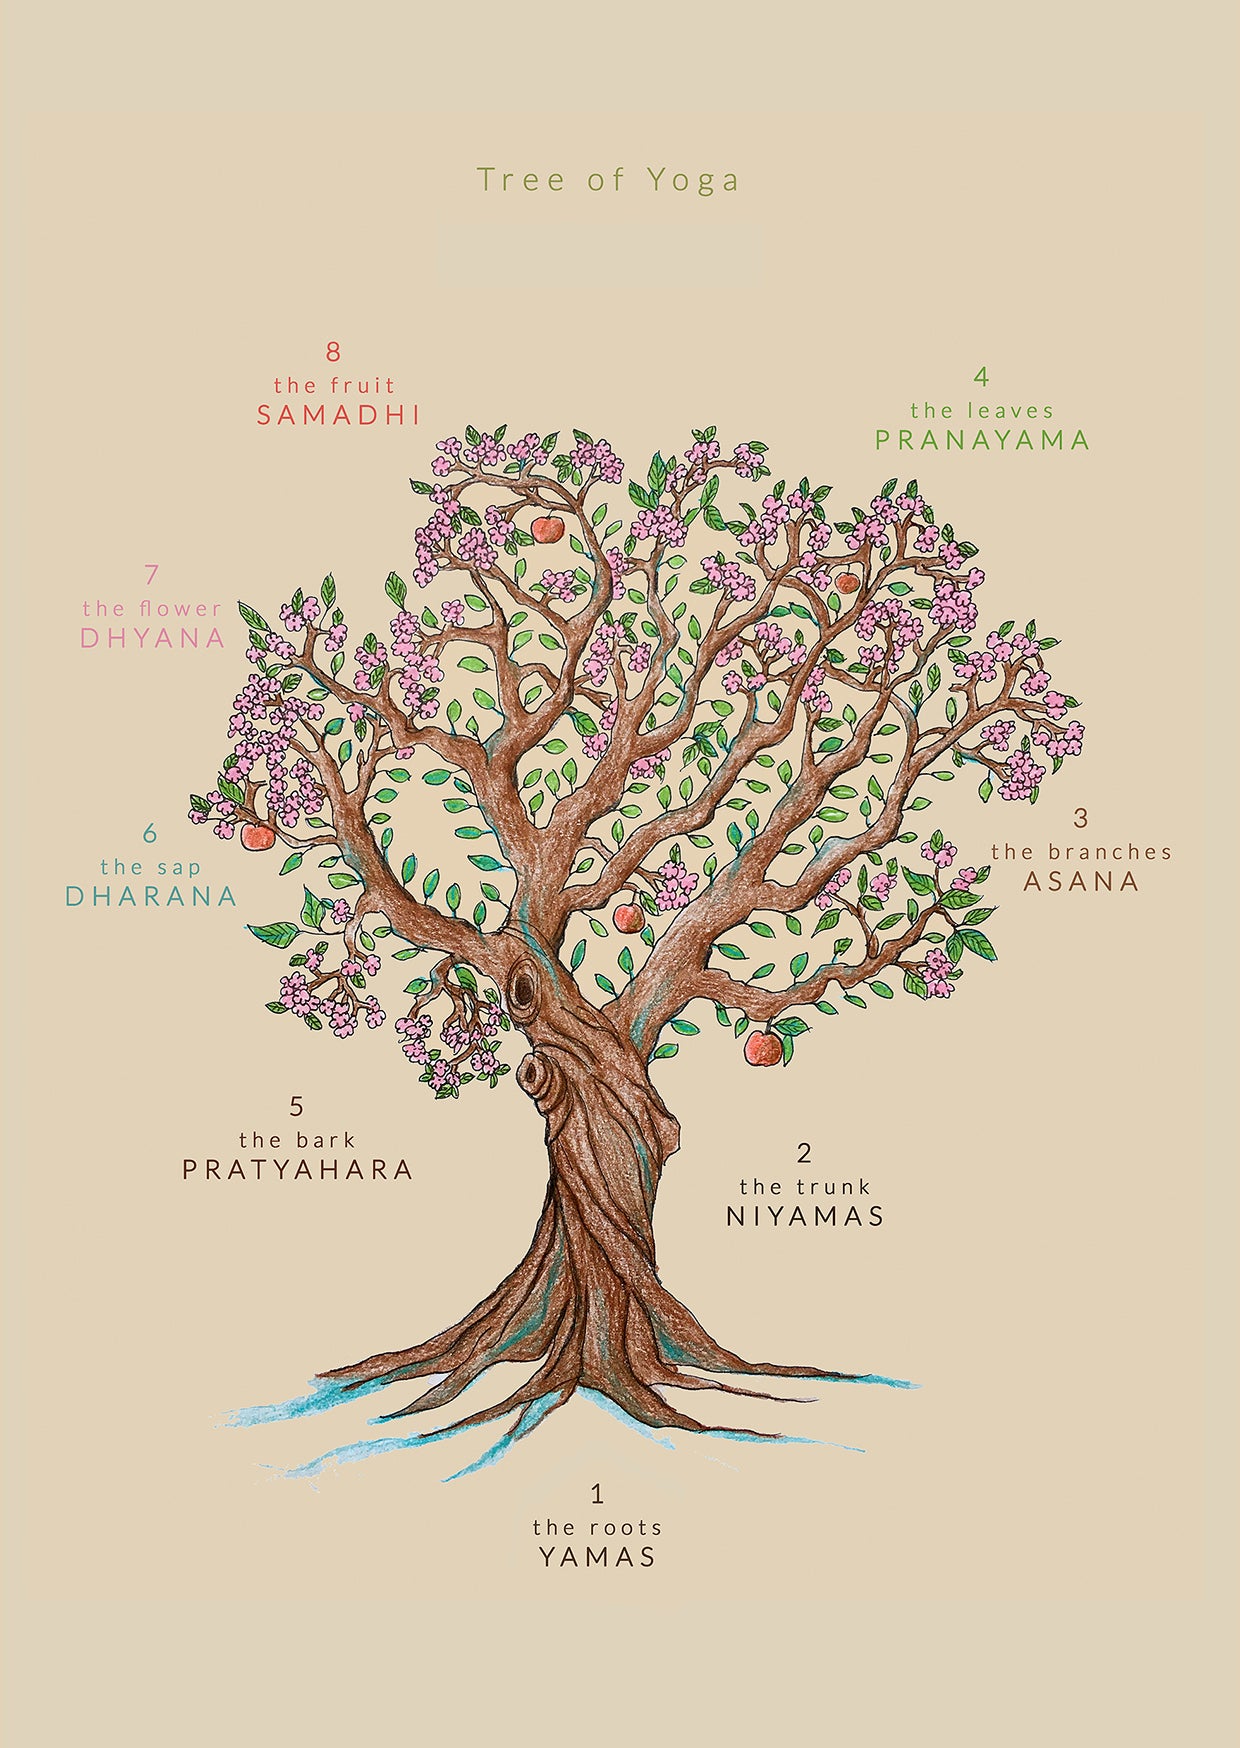 Svejar Yoga Art - Poster - Tree of Yoga